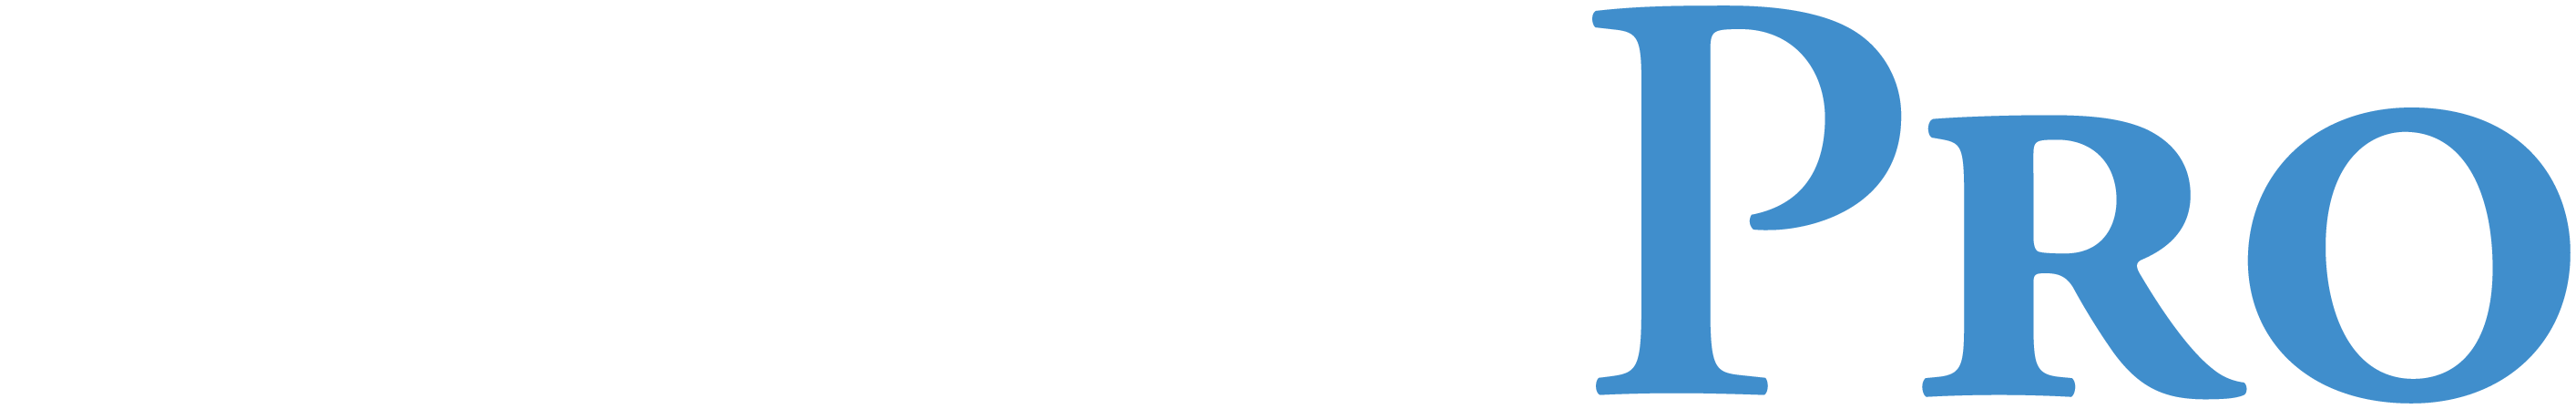 logo-color-dark-background